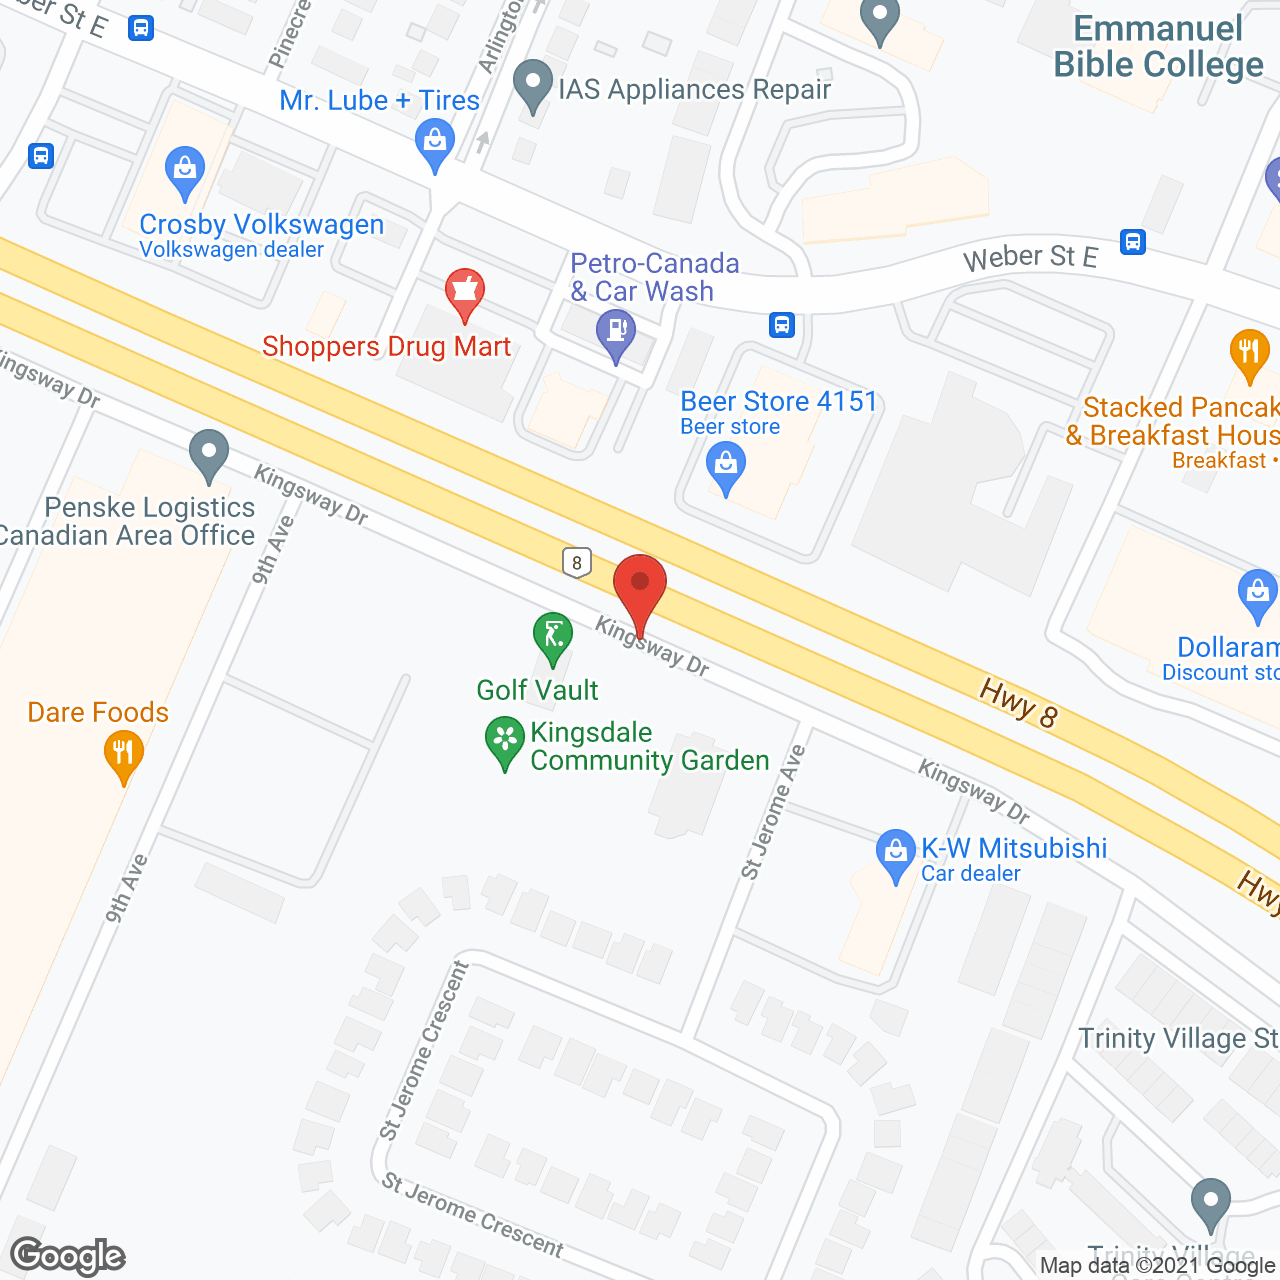 Trinity Village Studios in google map